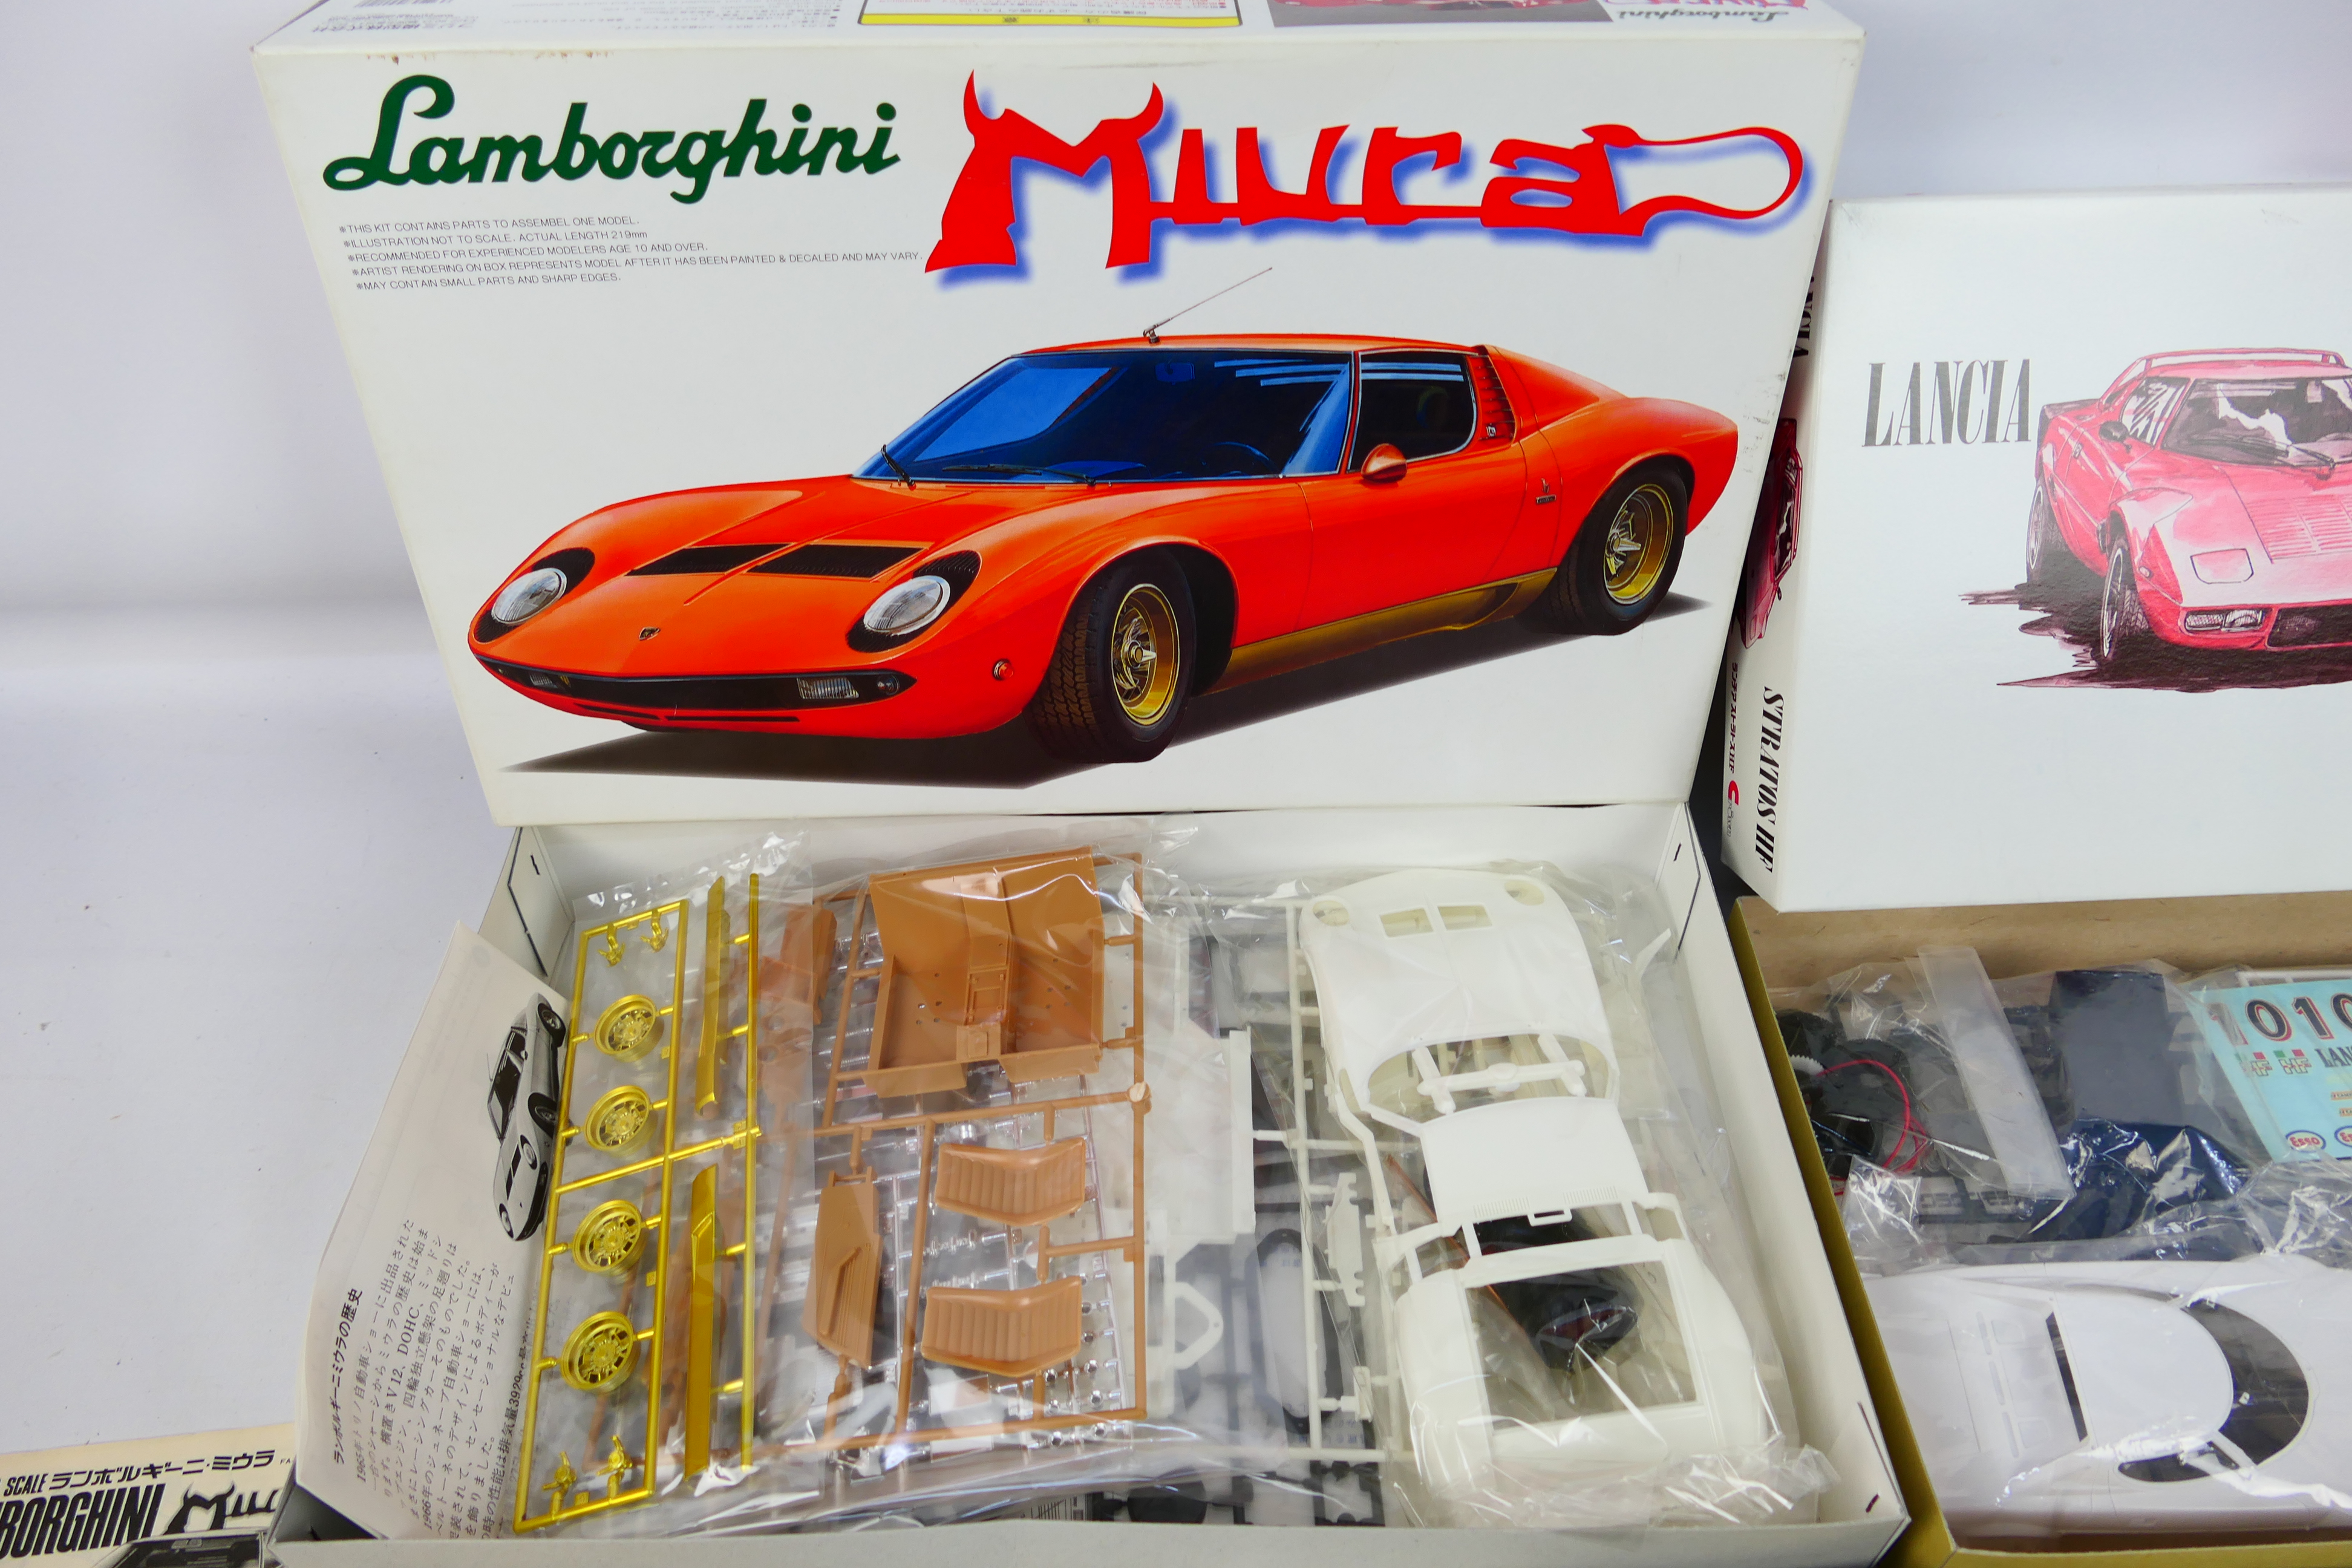 Crown - Fujimi - Nitto Kaguku - Three boxed plastic motor car model kits. - Image 2 of 4